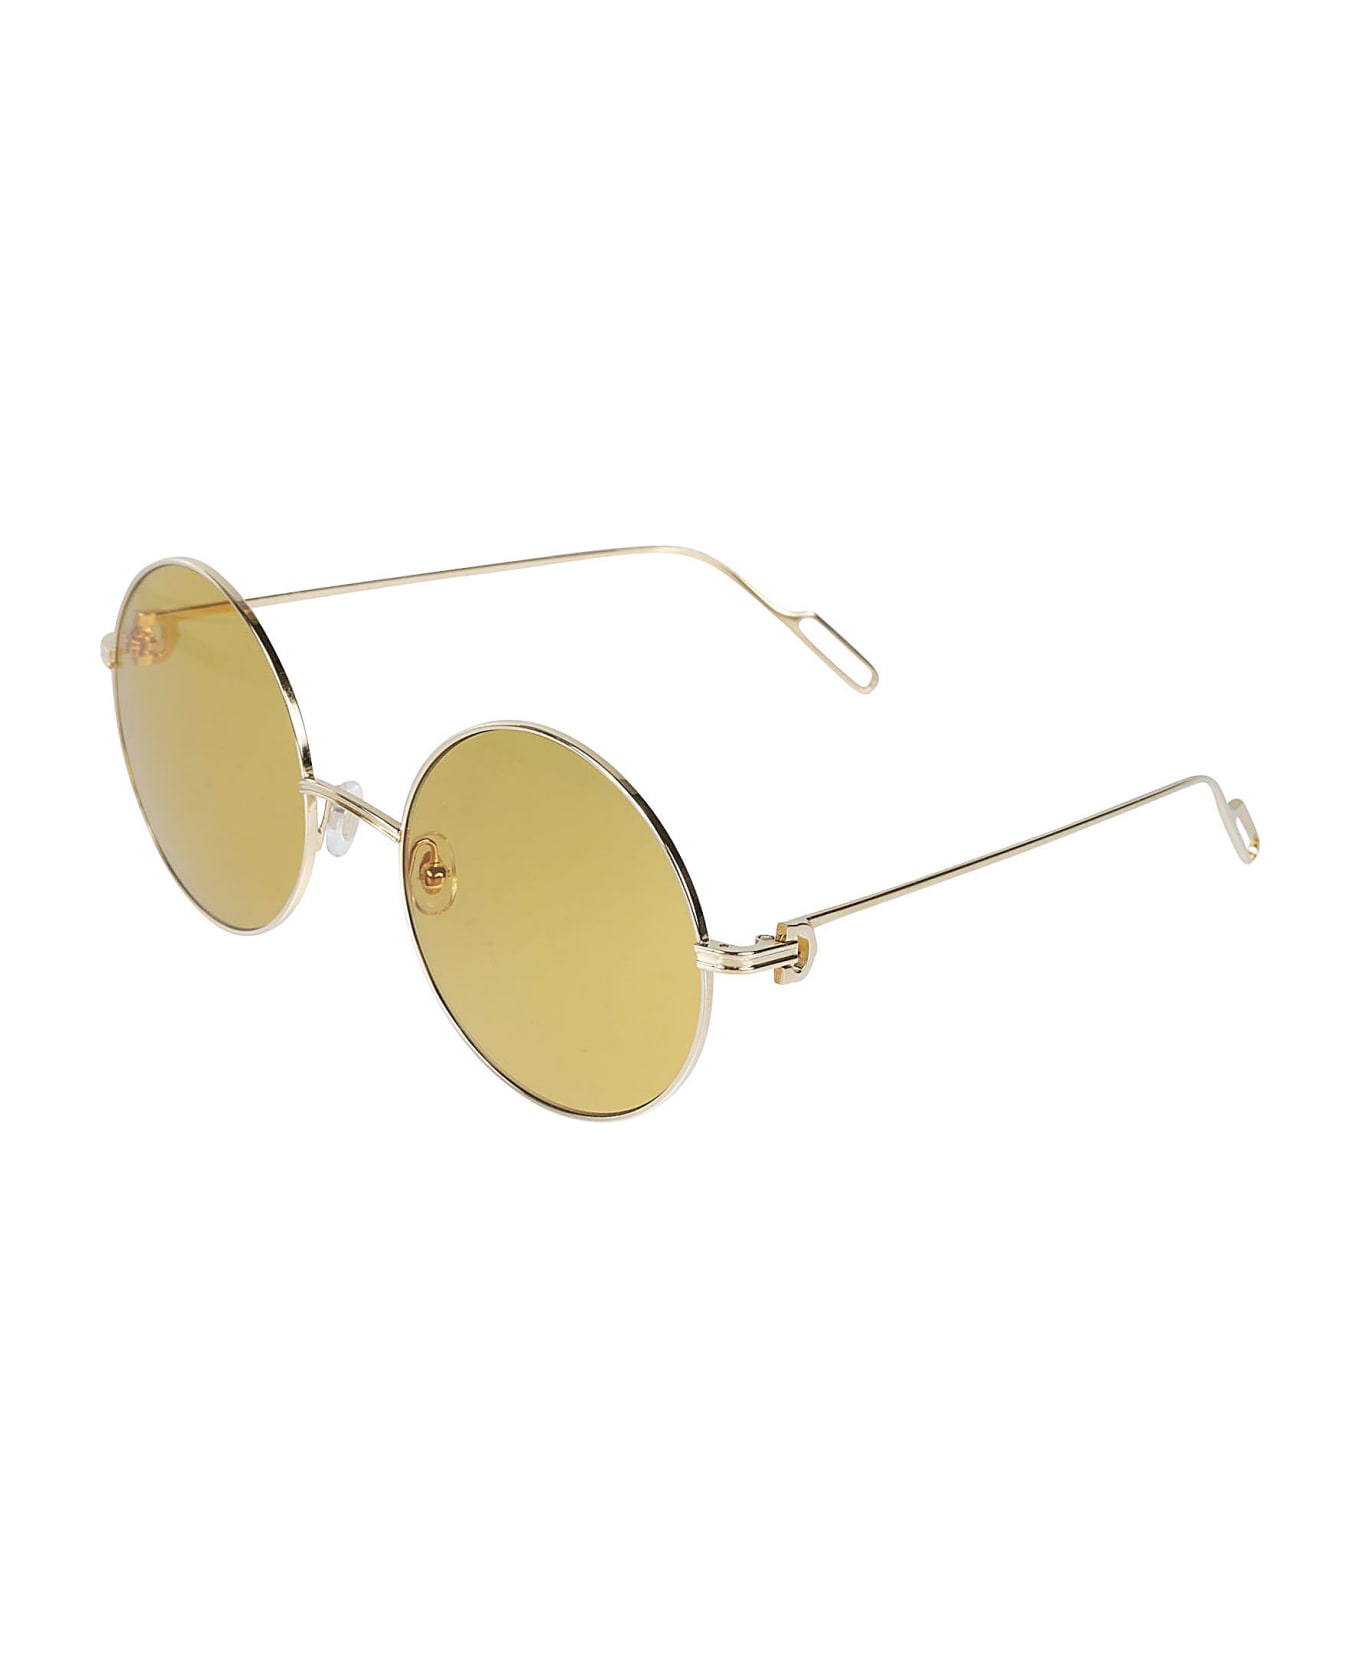 Cartier Eyewear Round Frame Sunglasses - Gold/Yellow